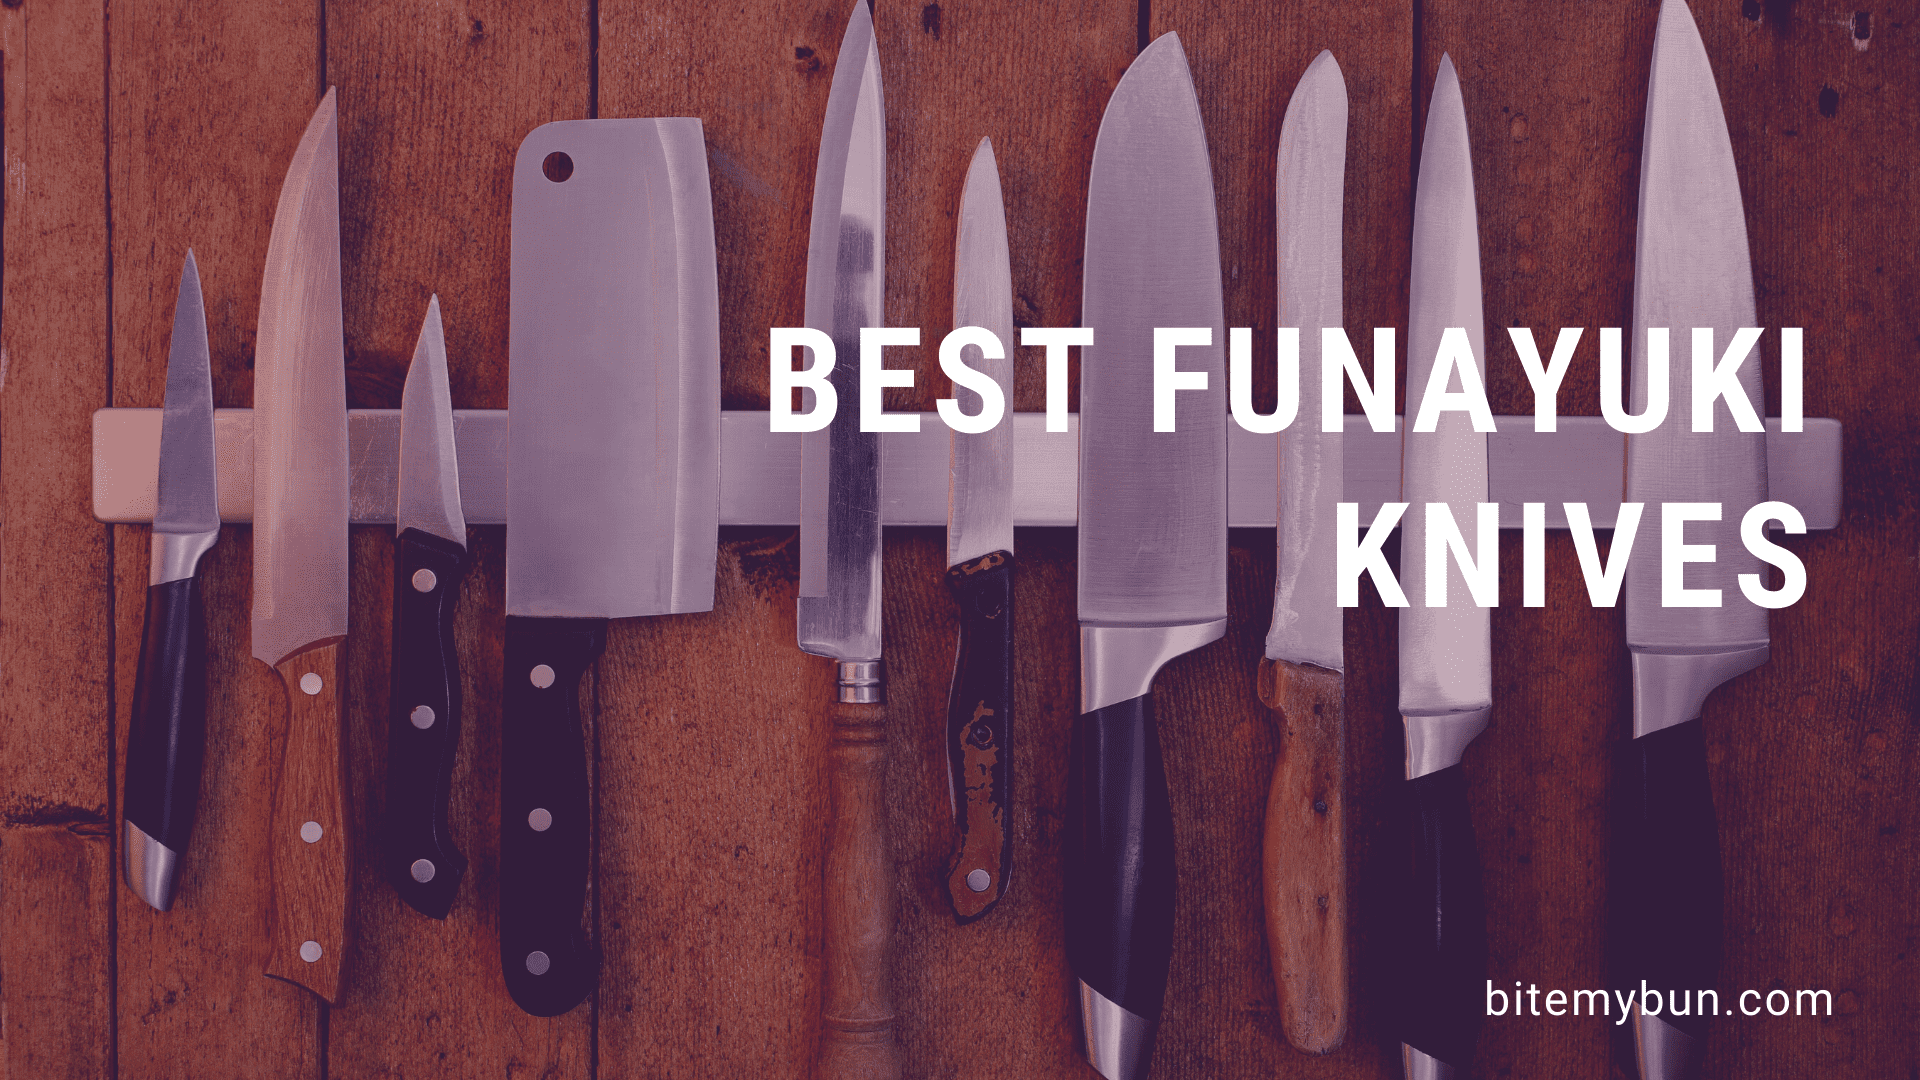 Best funayuki knives | Japanese fish cutting favorite [top 5 reviewed]